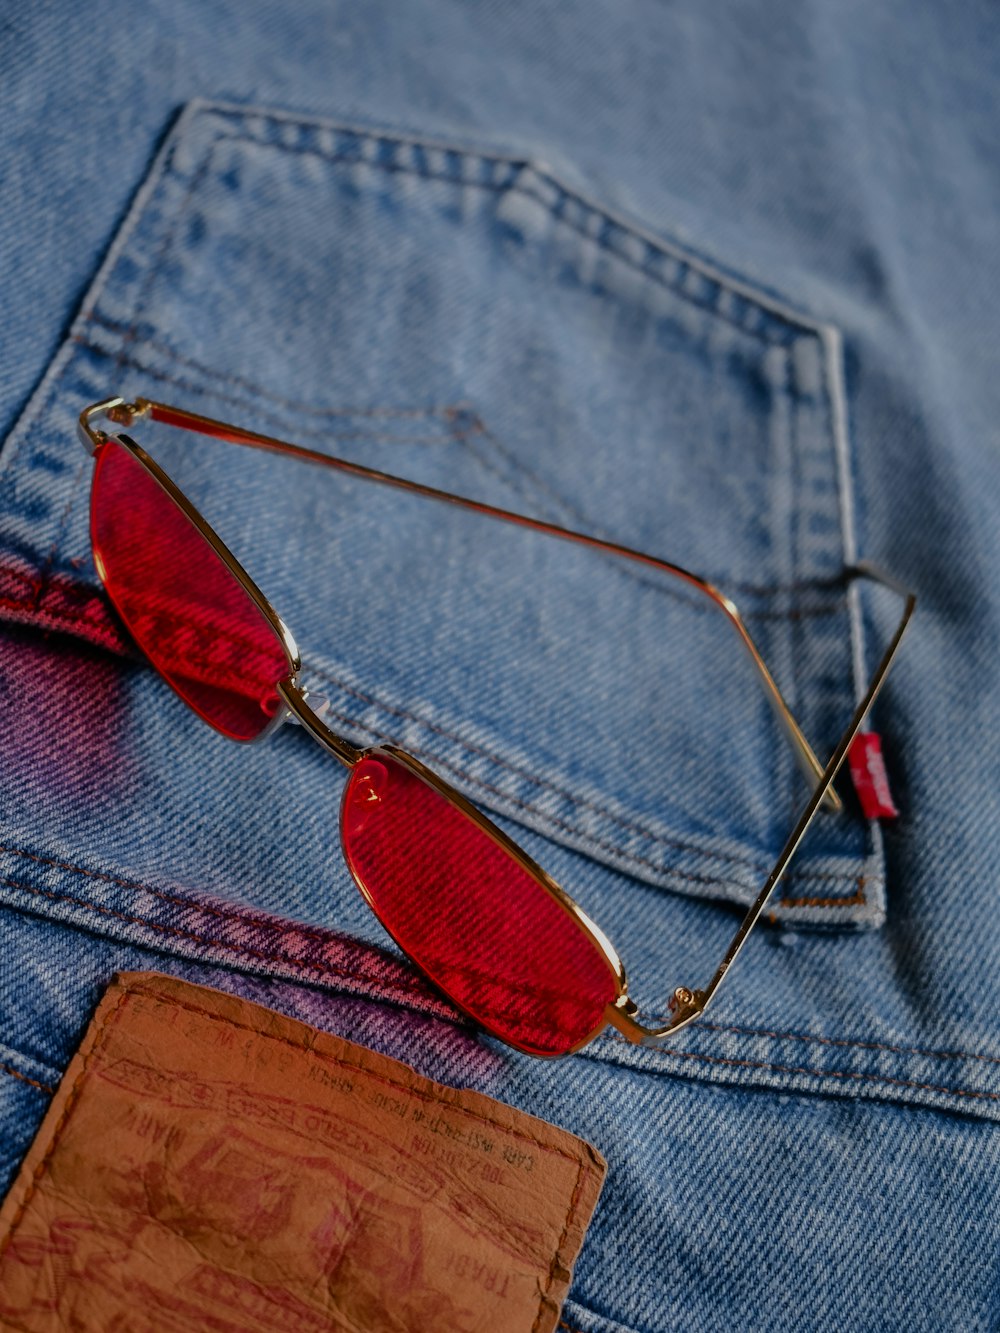 silver framed sunglasses on blue denim textile